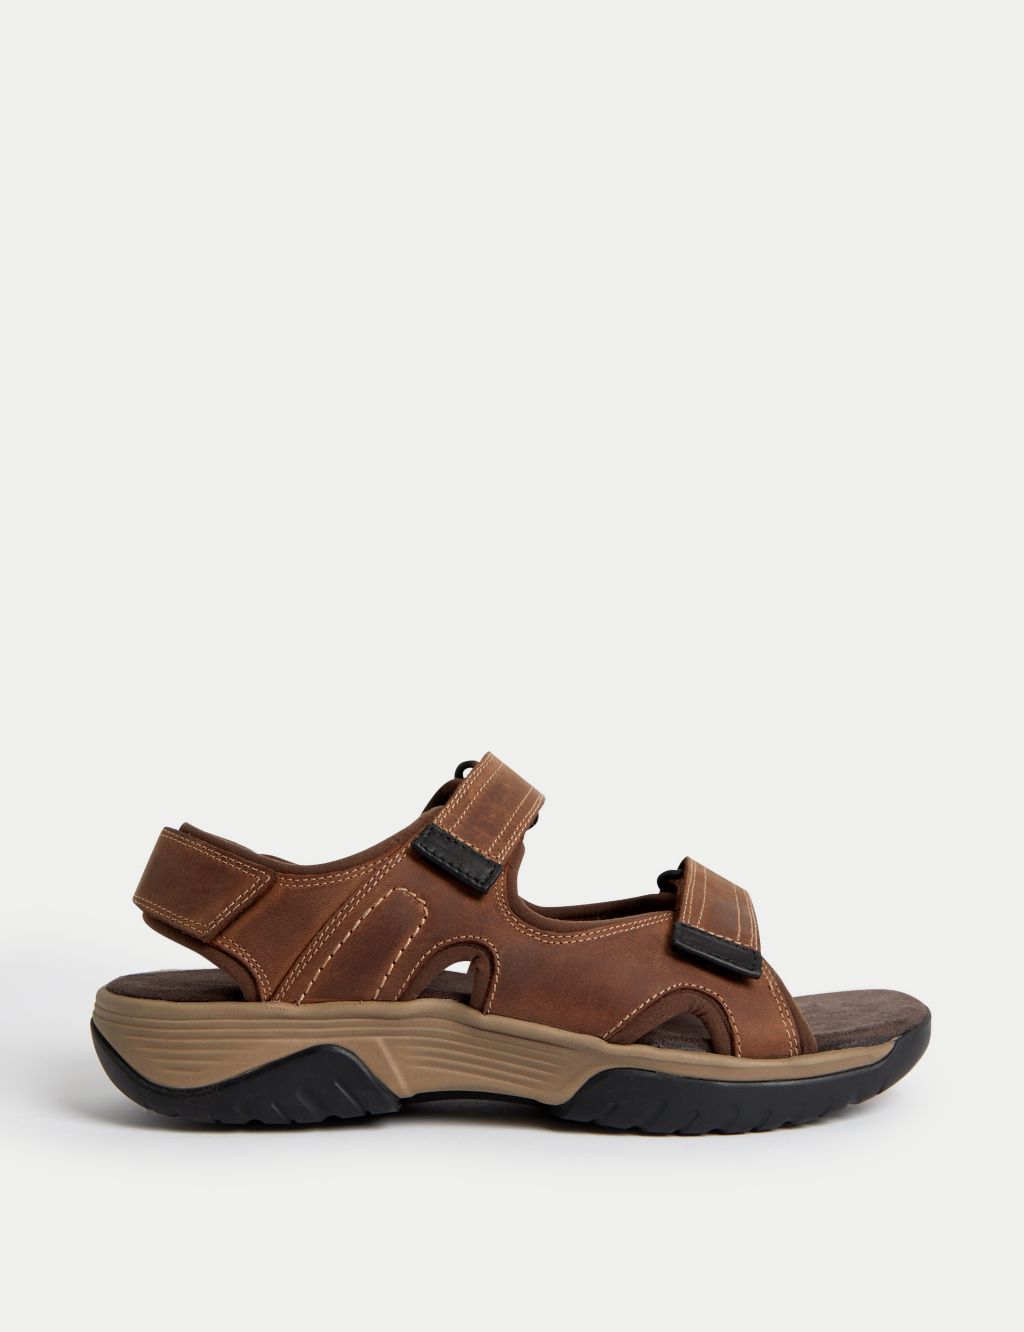 Airflex™ Nubuck Leather Riptape Sandals image 1